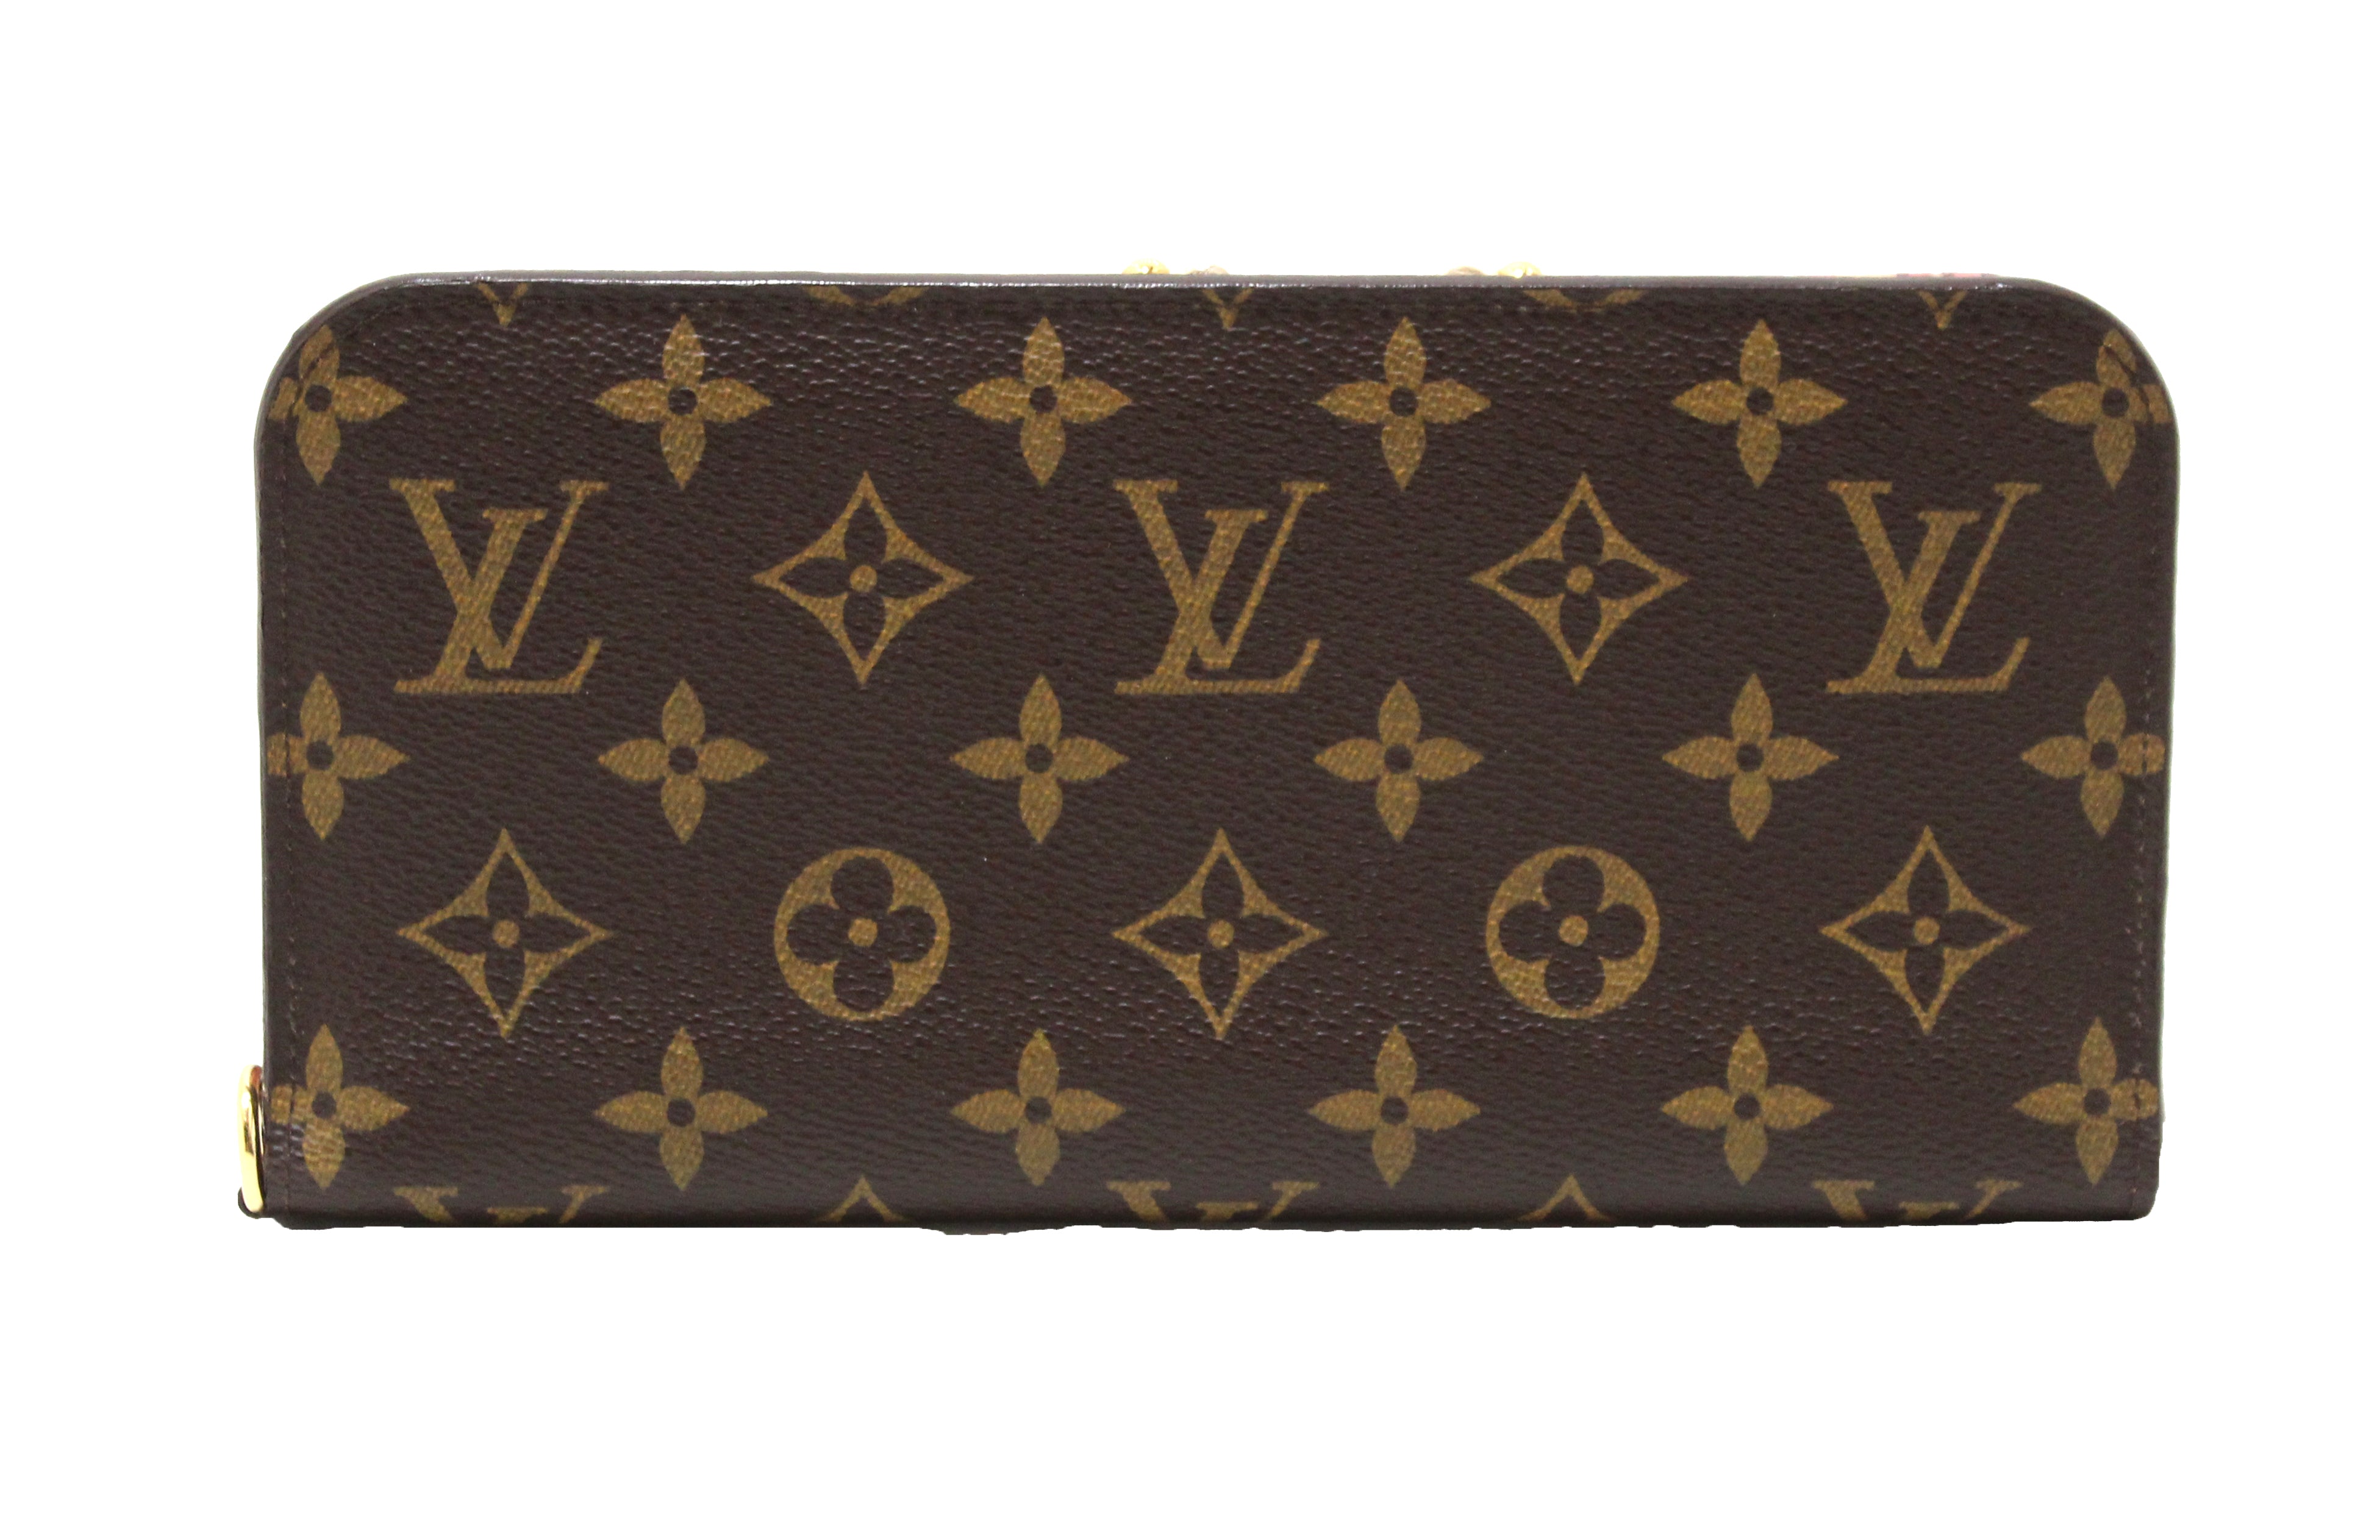 Authentic Louis Vuitton Limited Edition Monogram Canvas Stephen Sprouse Leopard Insolite Wallet